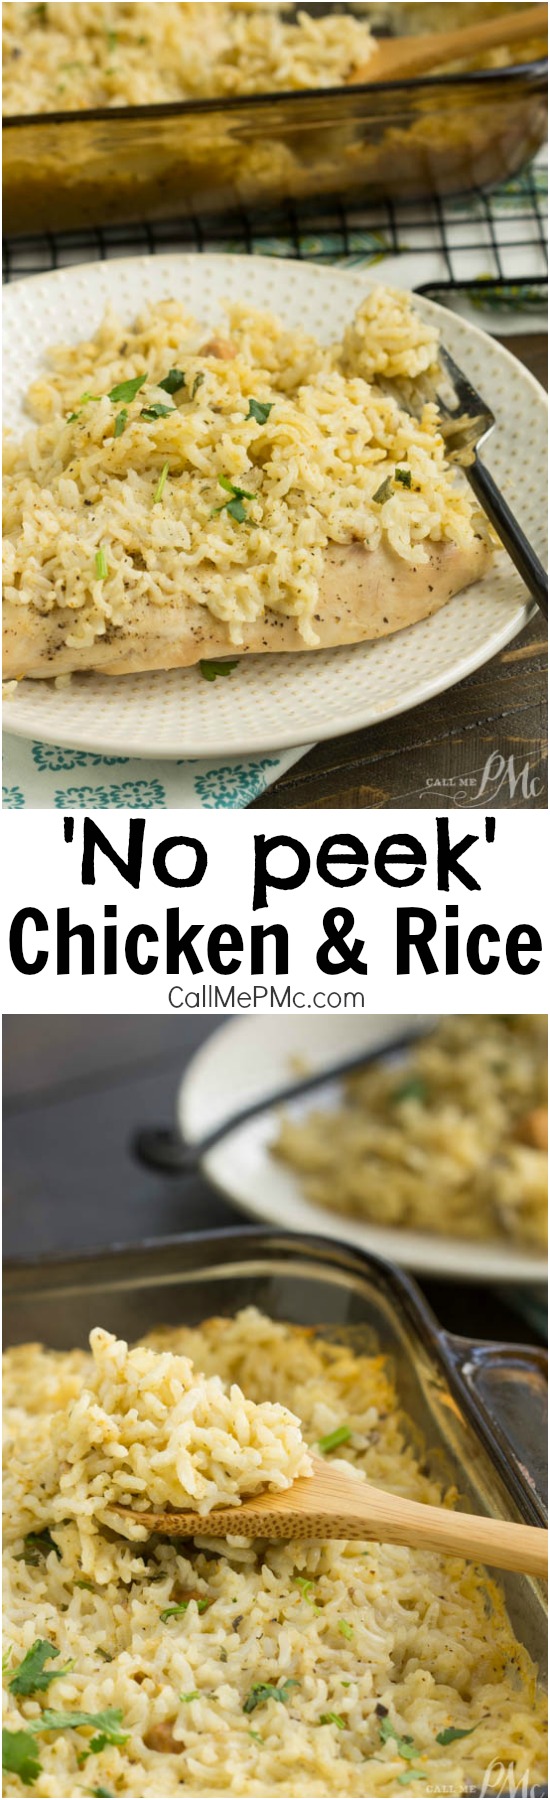 no peek chicken recipe with wild rice